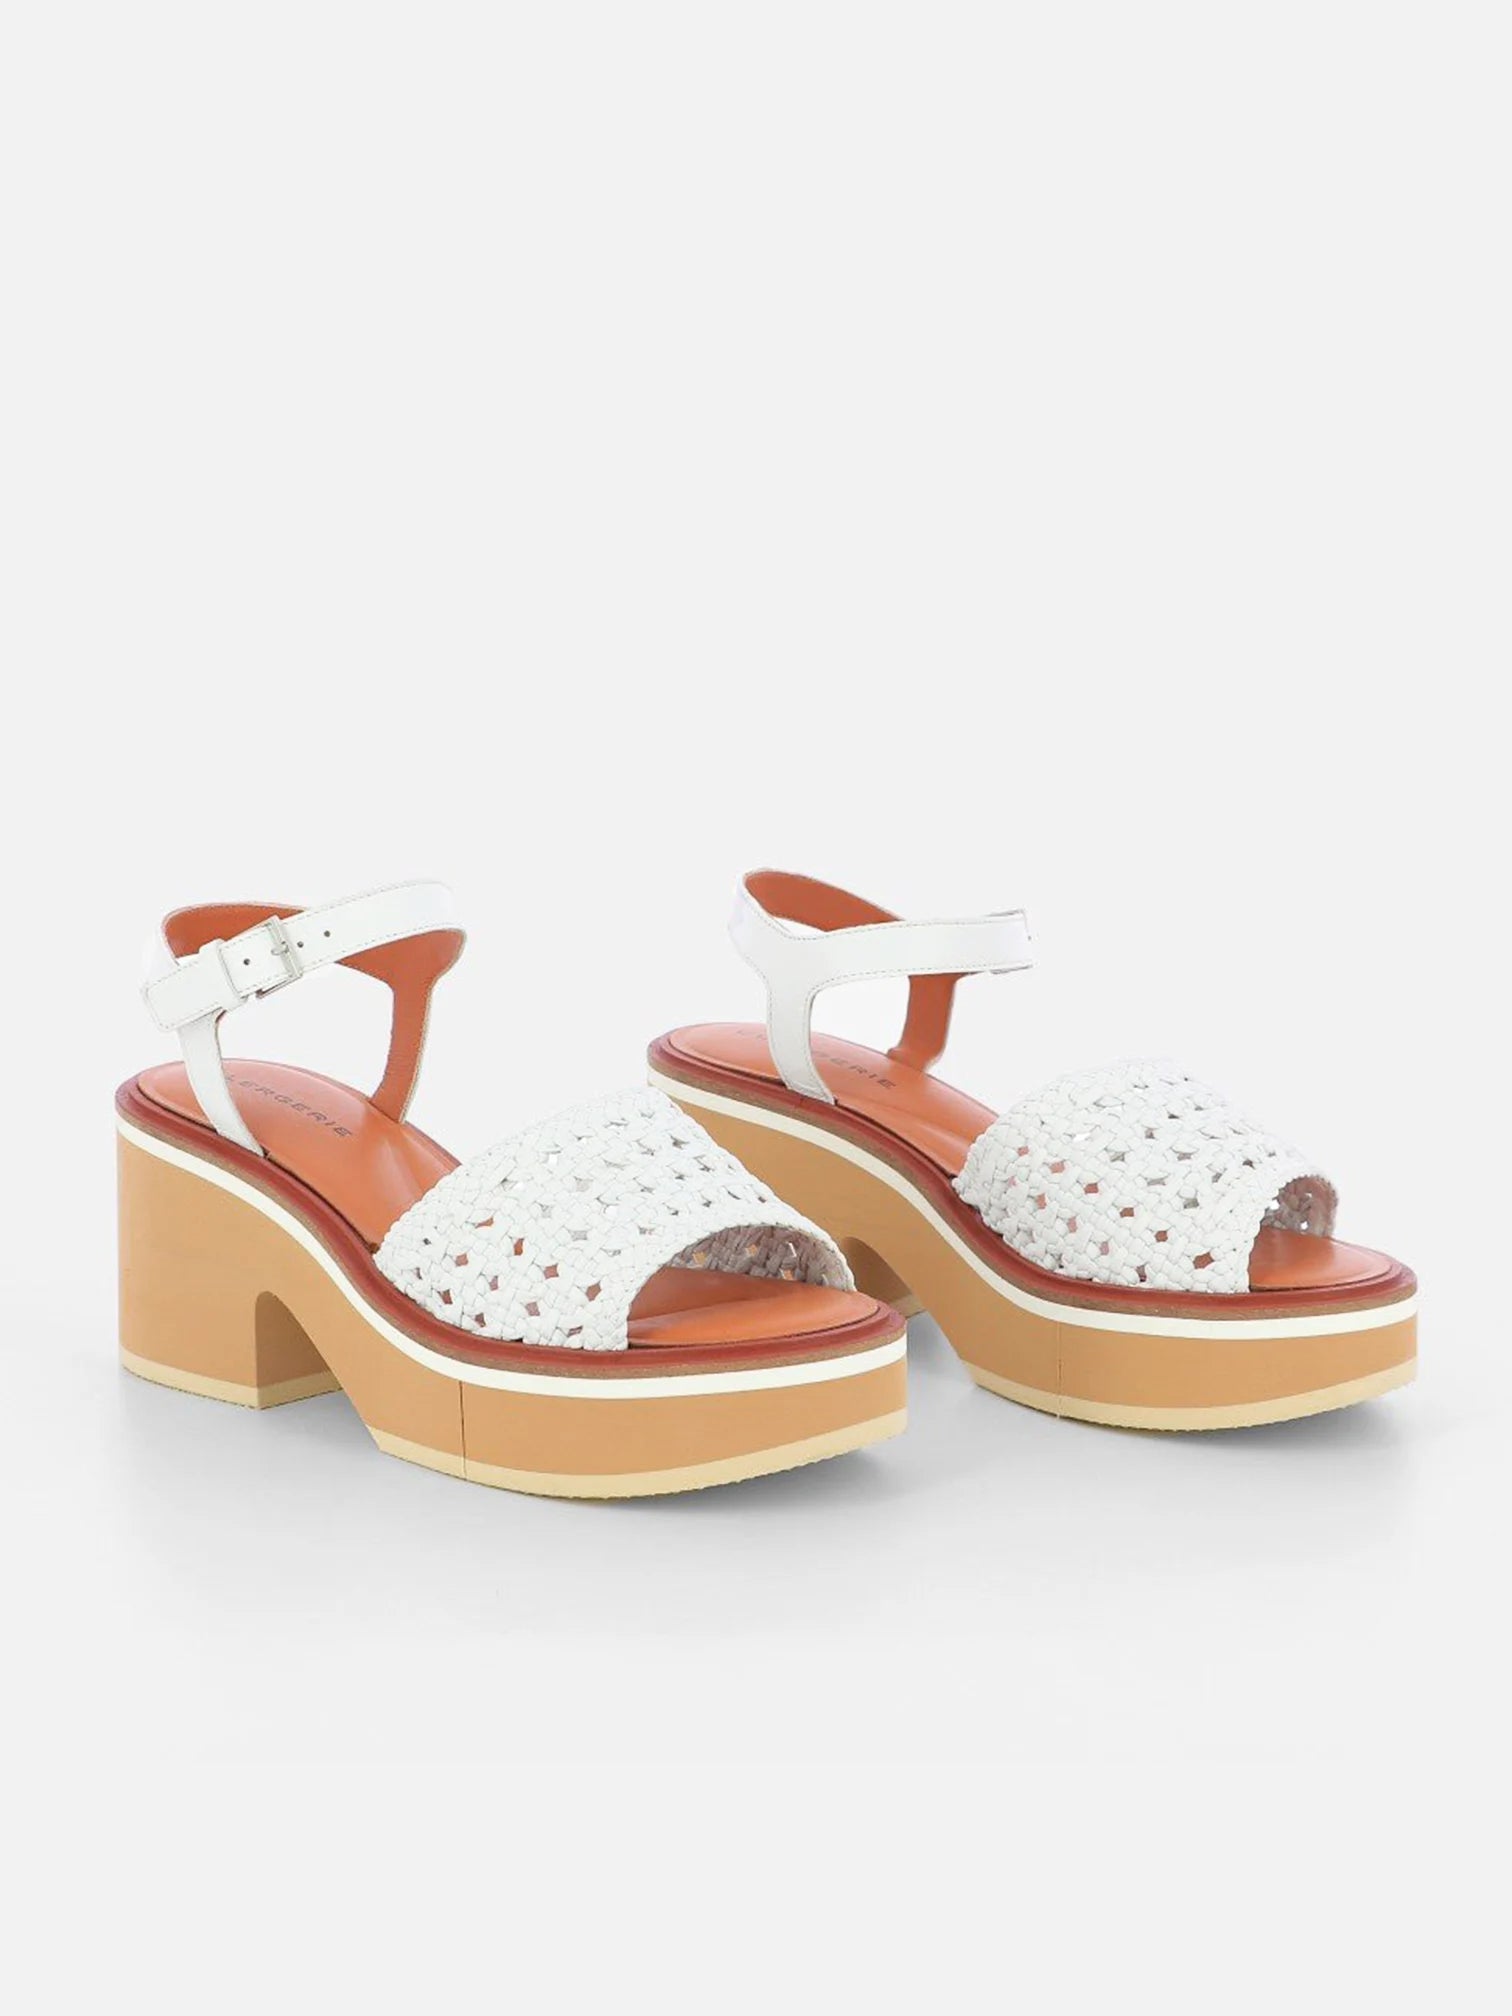 SANDALS - CELITA sandals, nappa white || OUTLET - 3606063682909 - Clergerie Paris - Europe